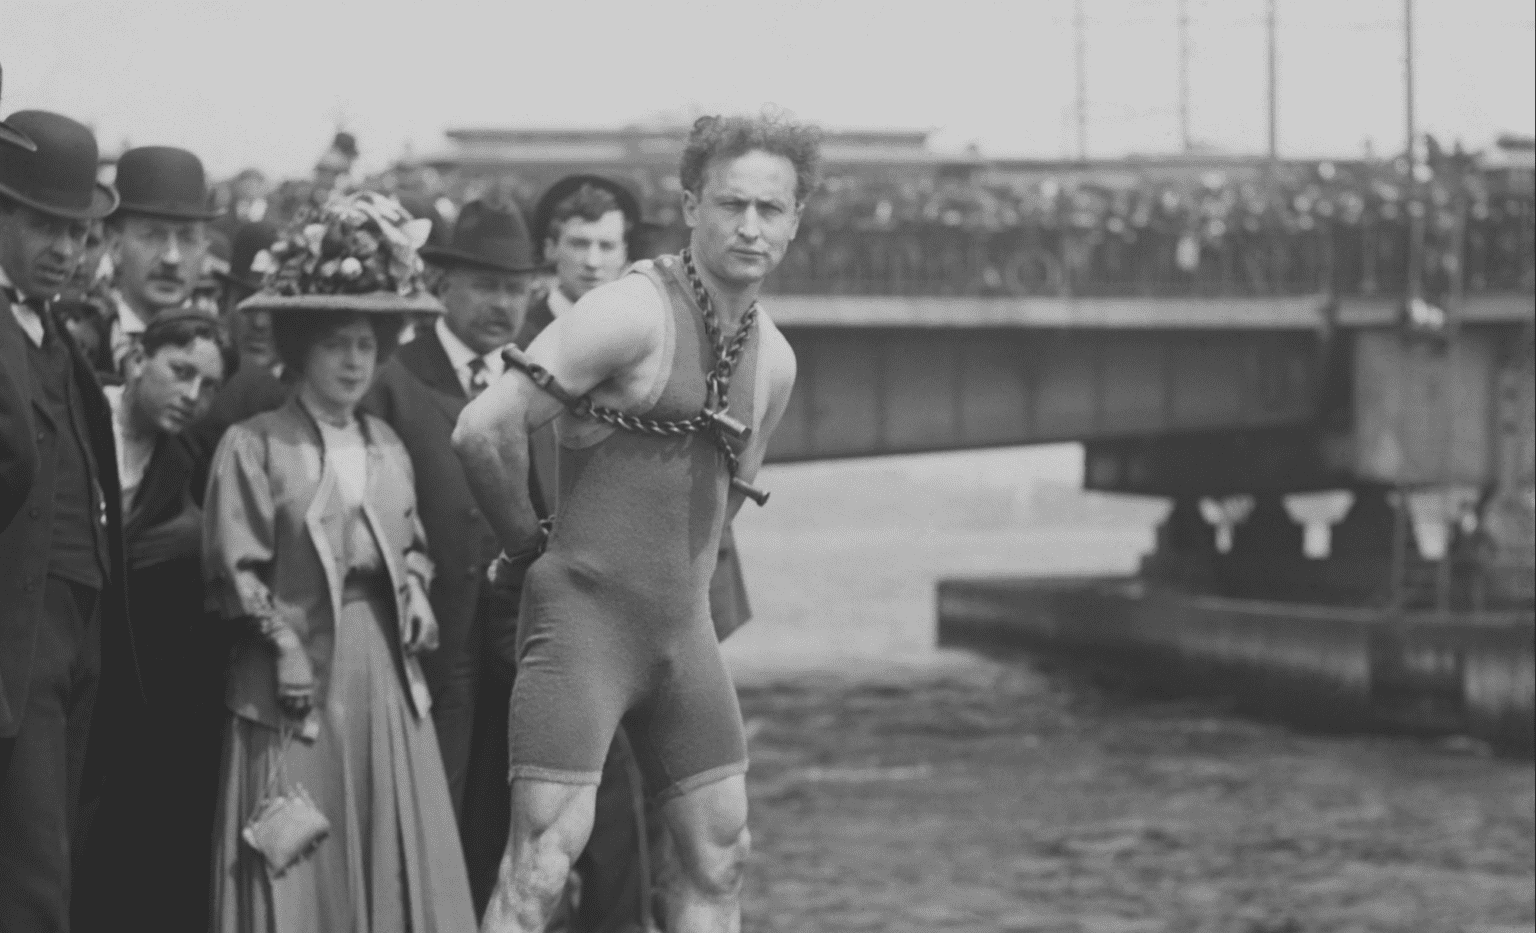 The Master of Illusion: Harry Houdini, the Hungarian Born American Magician